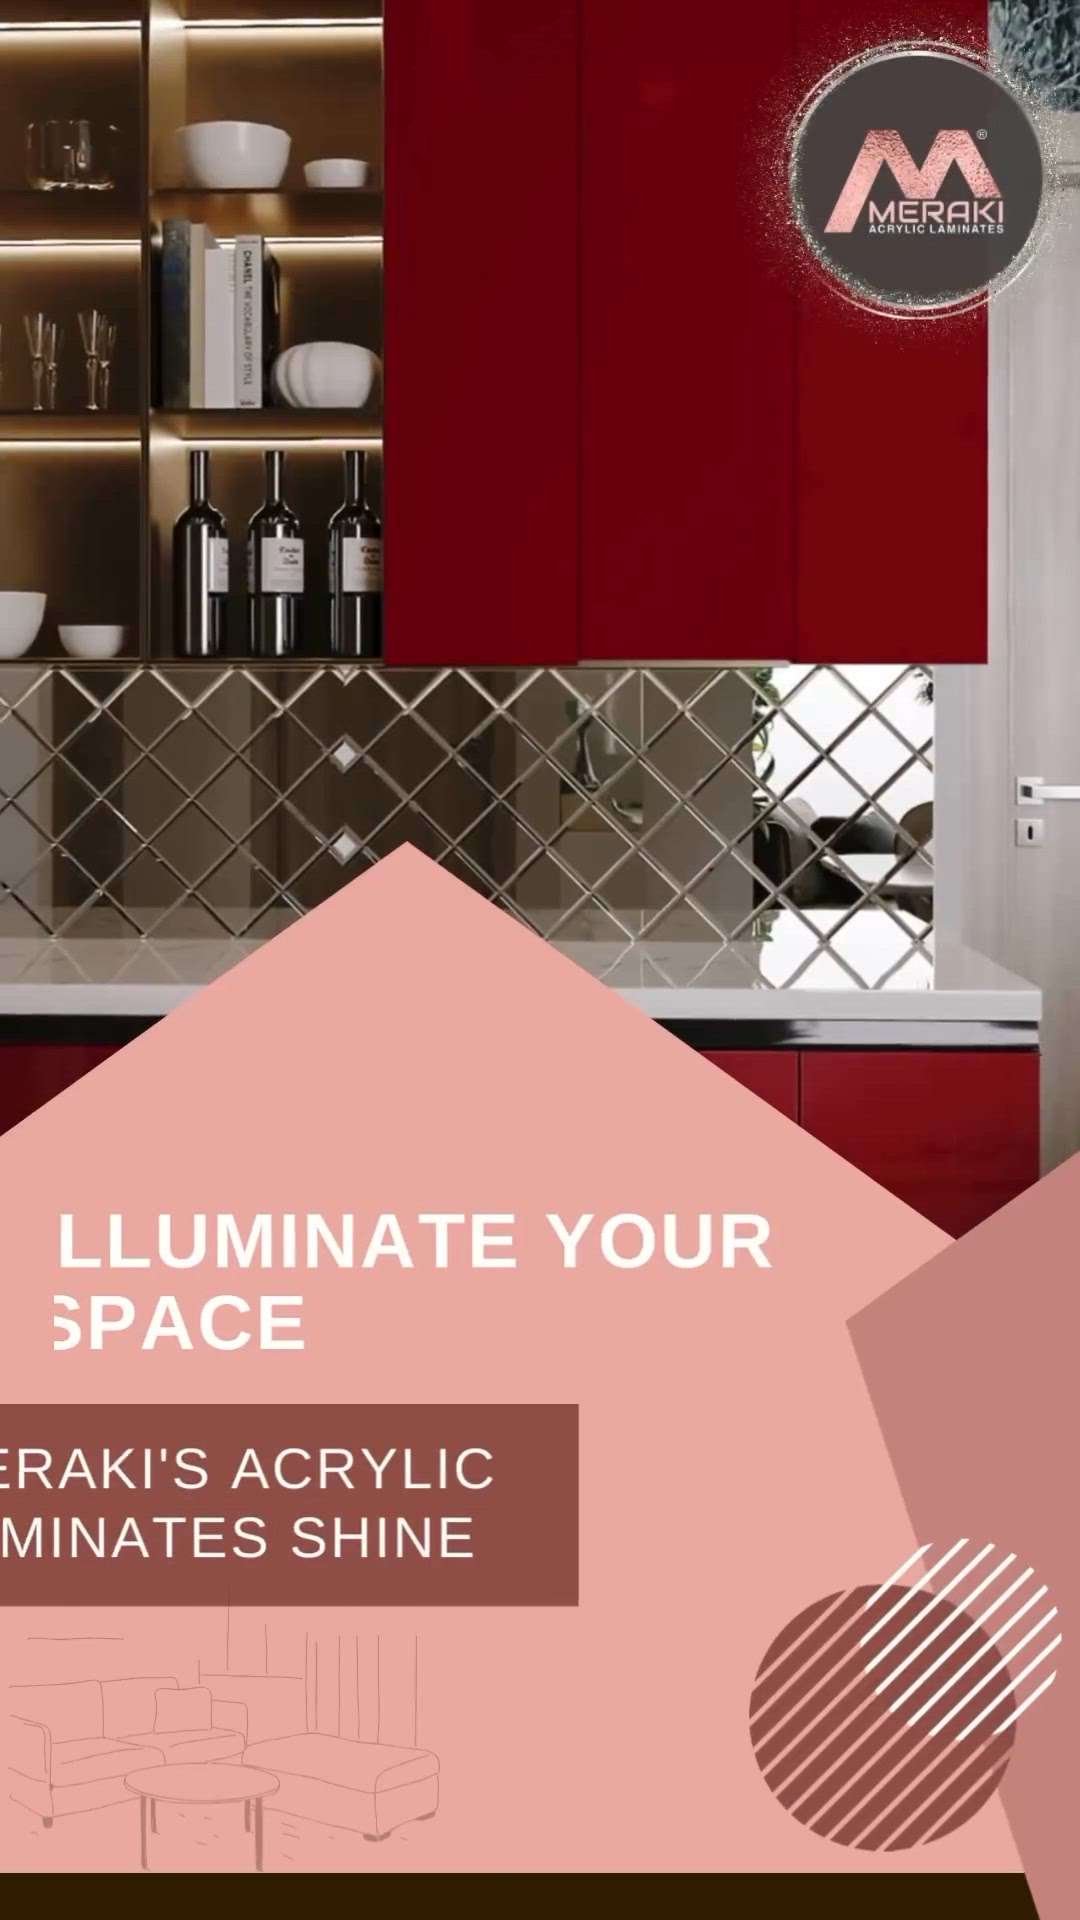 Elevate your space with Meraki Acrylic Laminates -where brilliance meets durability 🌟
For enquiries contact 7907805100

 #MERAKI #acryliclamintes #Acrylic #acrylicsheet #KitchenIdeas #HomeDecor